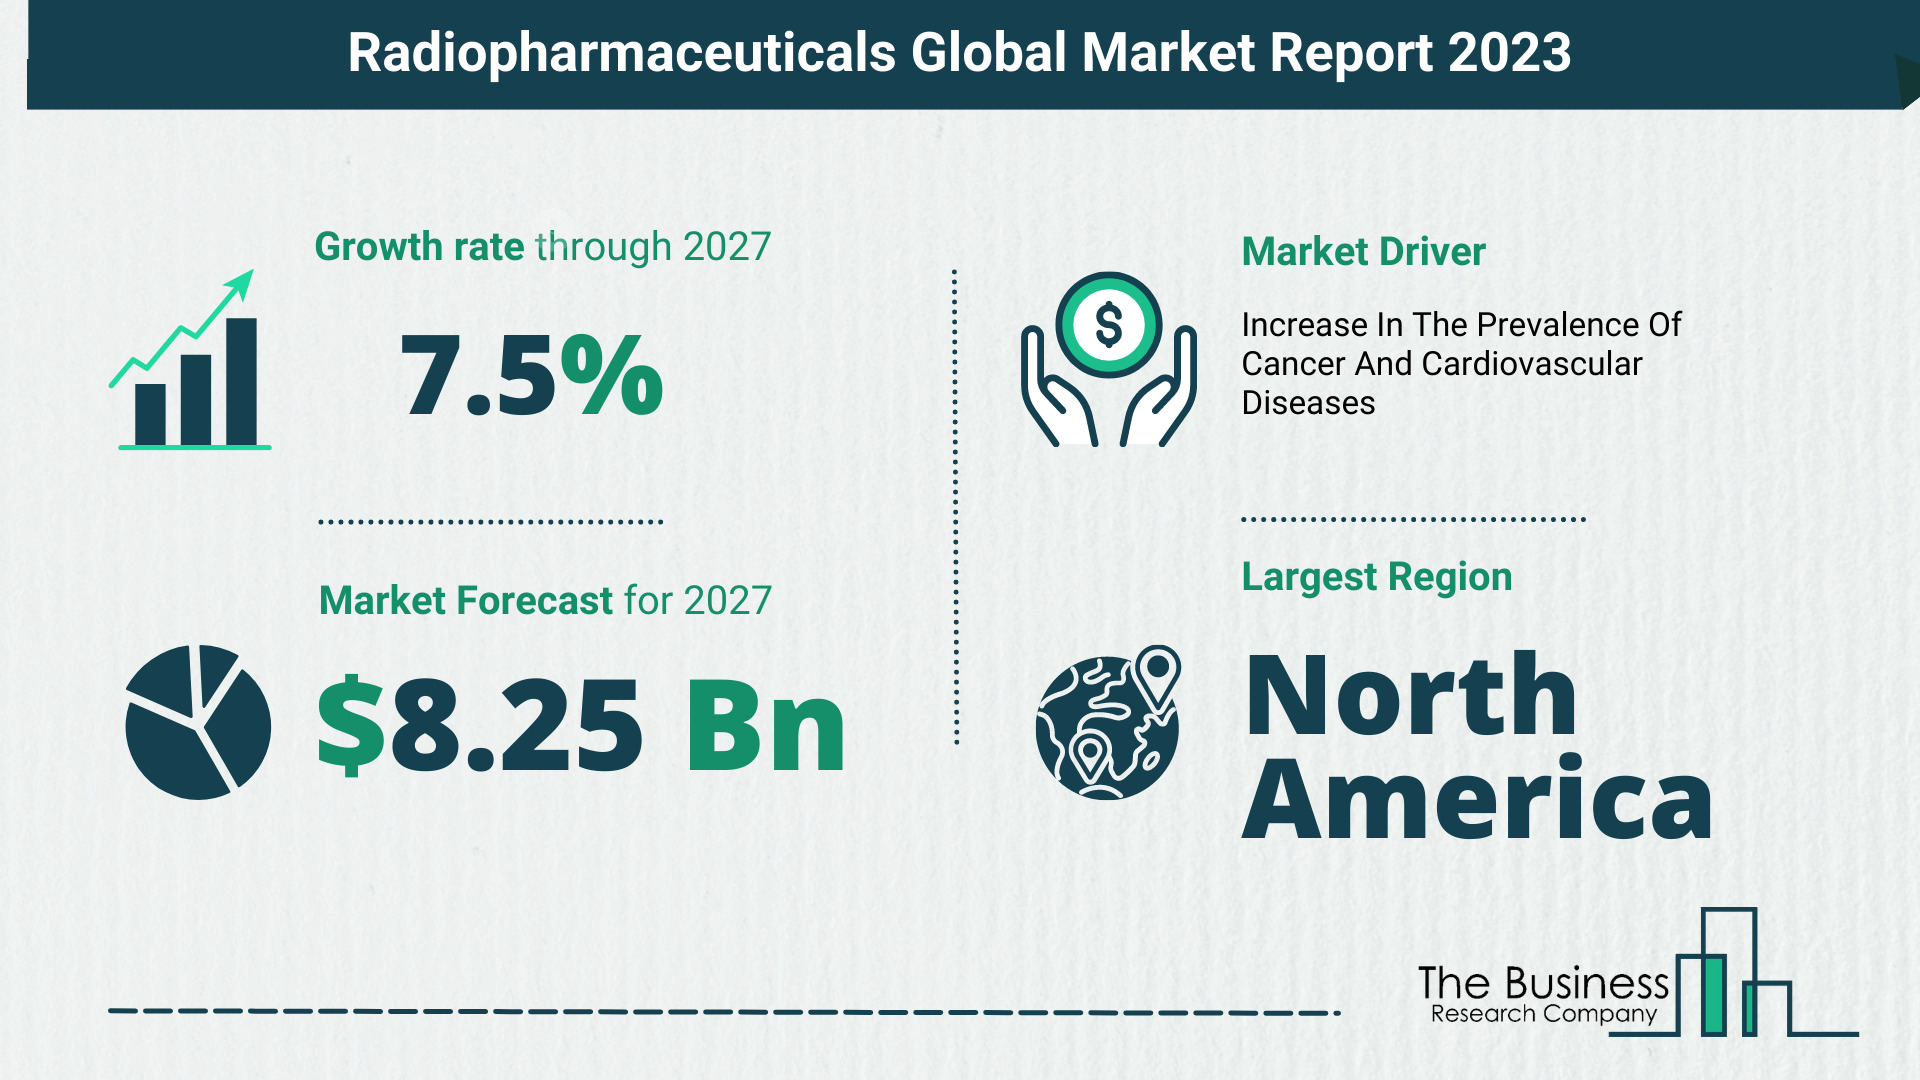 Global Radiopharmaceuticals Market